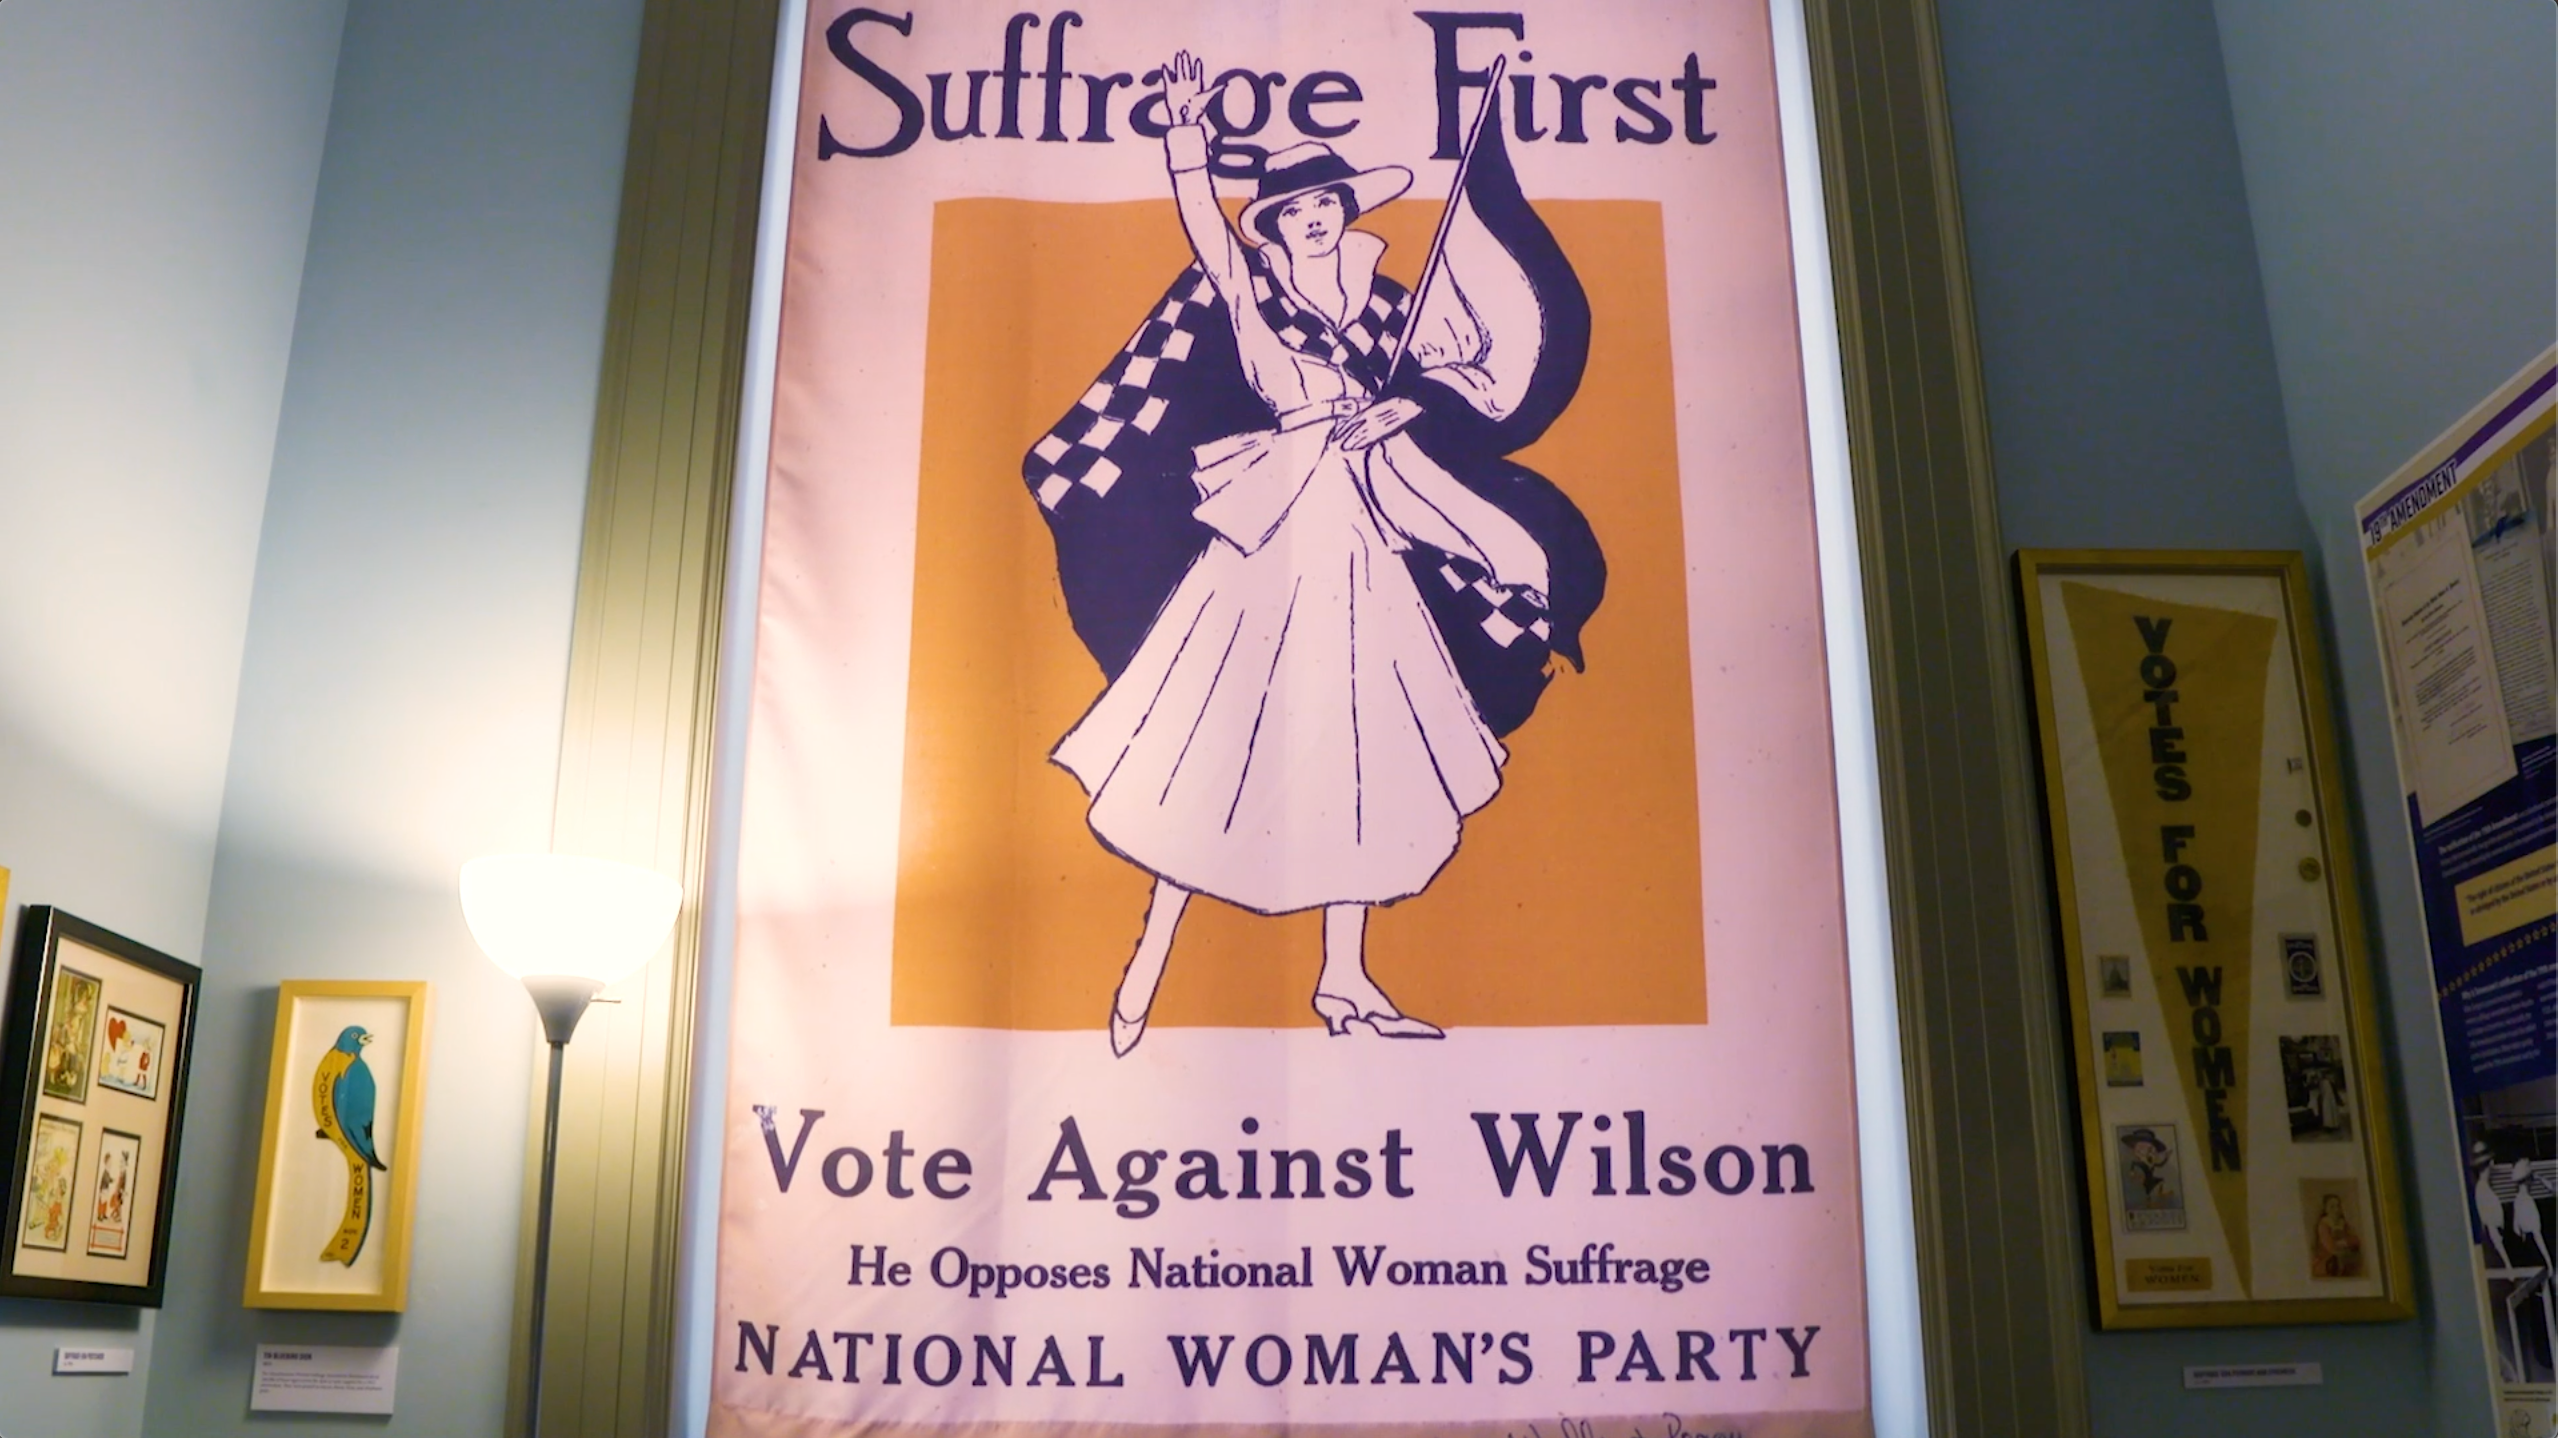 Florida Historic Capitol Exhibit Honors Suffrage Movement